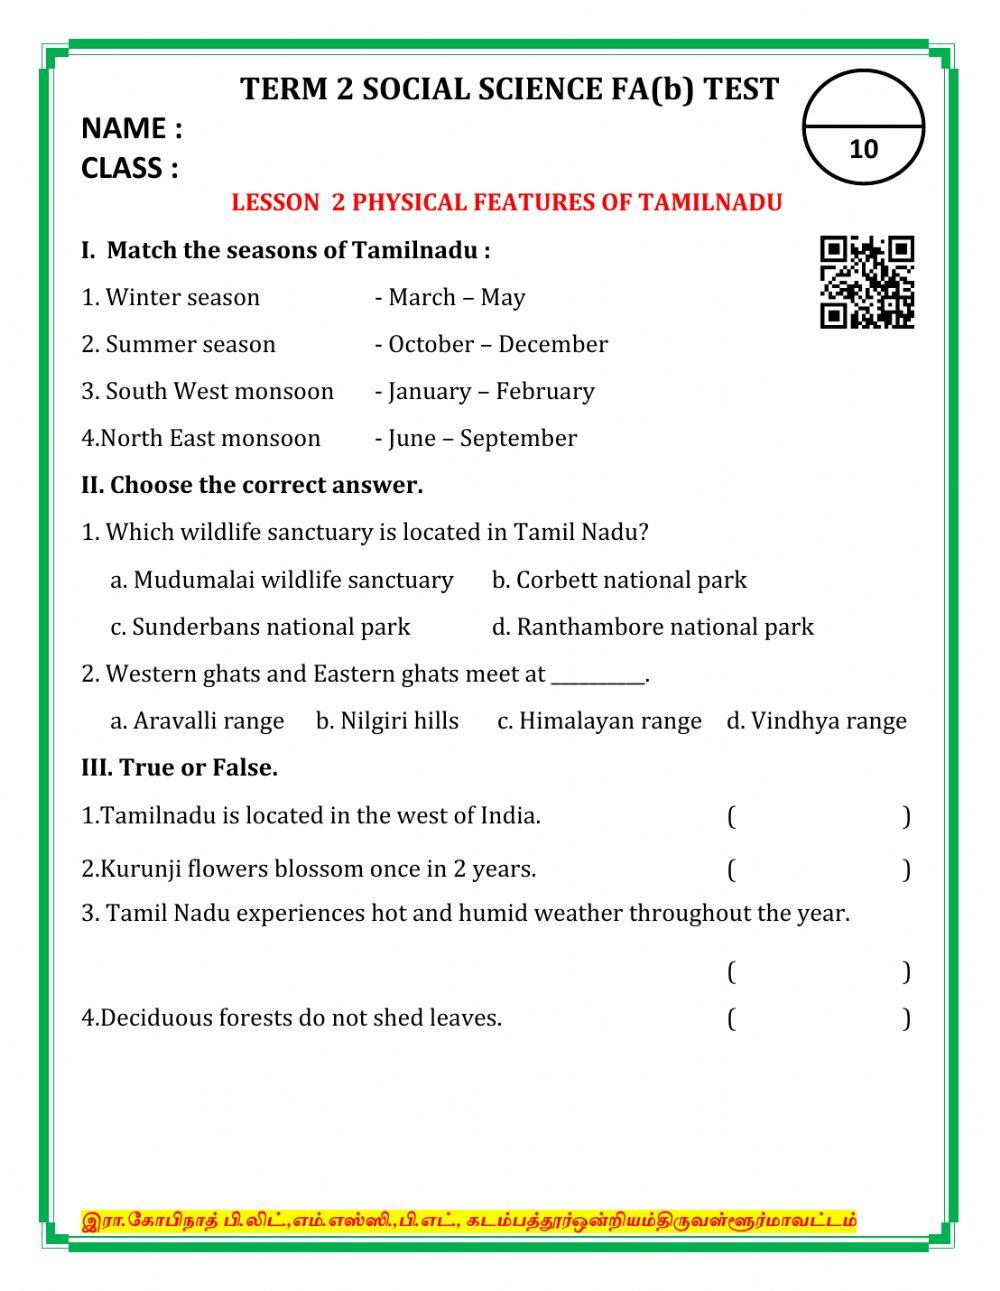 Term 2 social 2 .physical features of tamilnadu